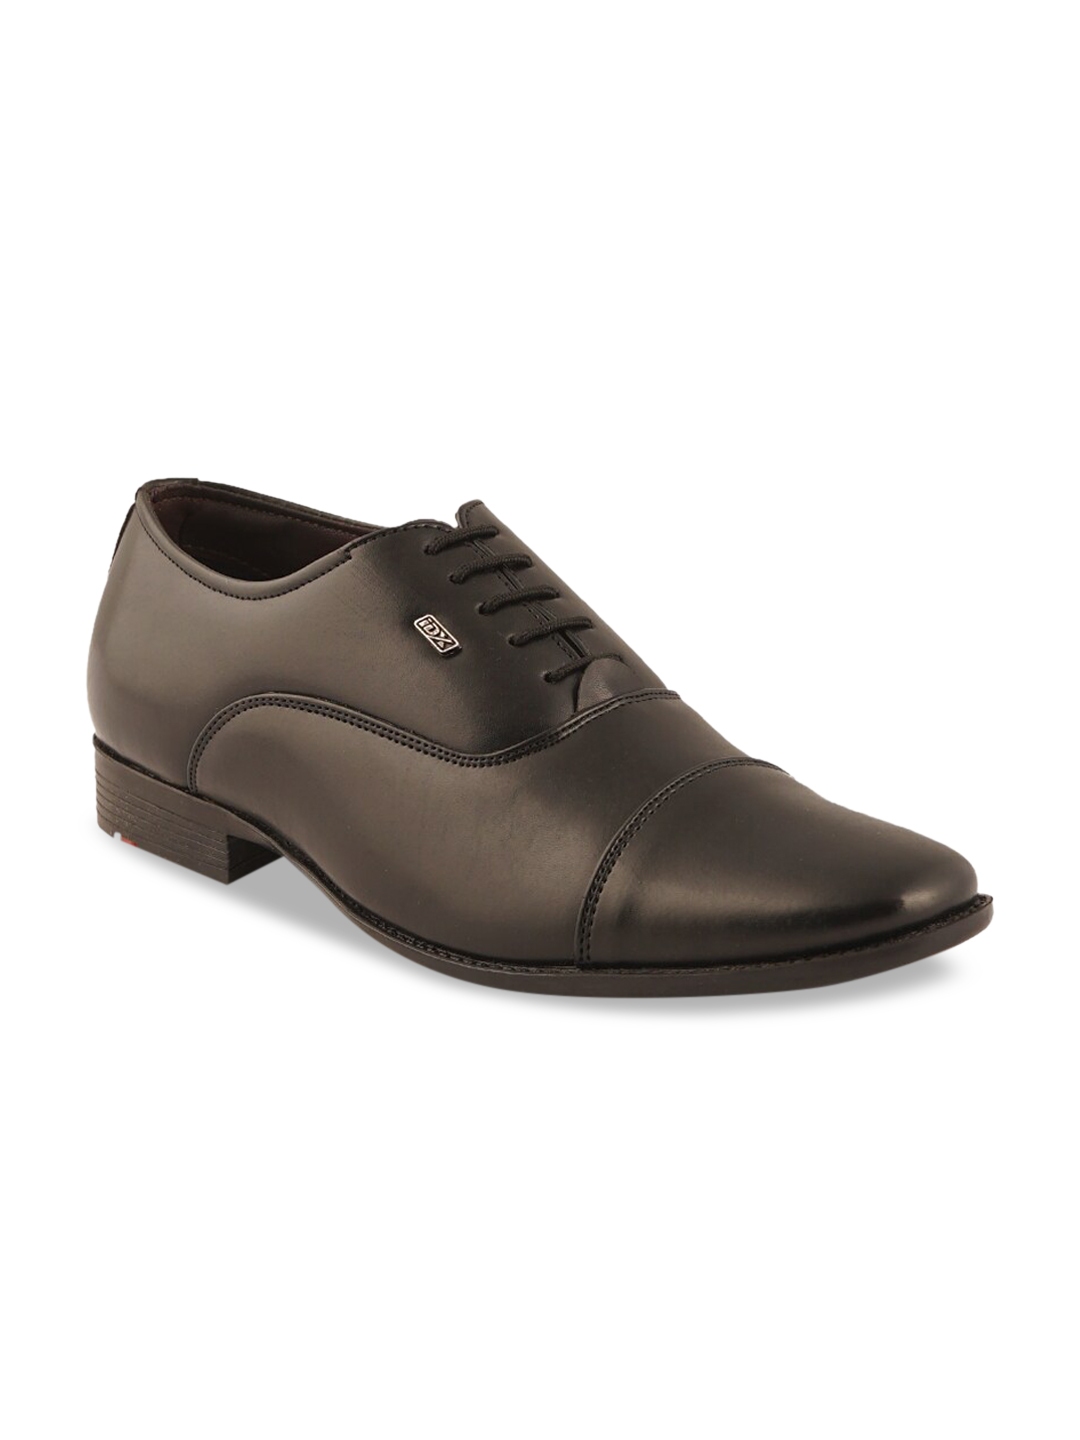 Buy ID Men Black Solid Leather Formal Shoes - Formal Shoes for Men ...